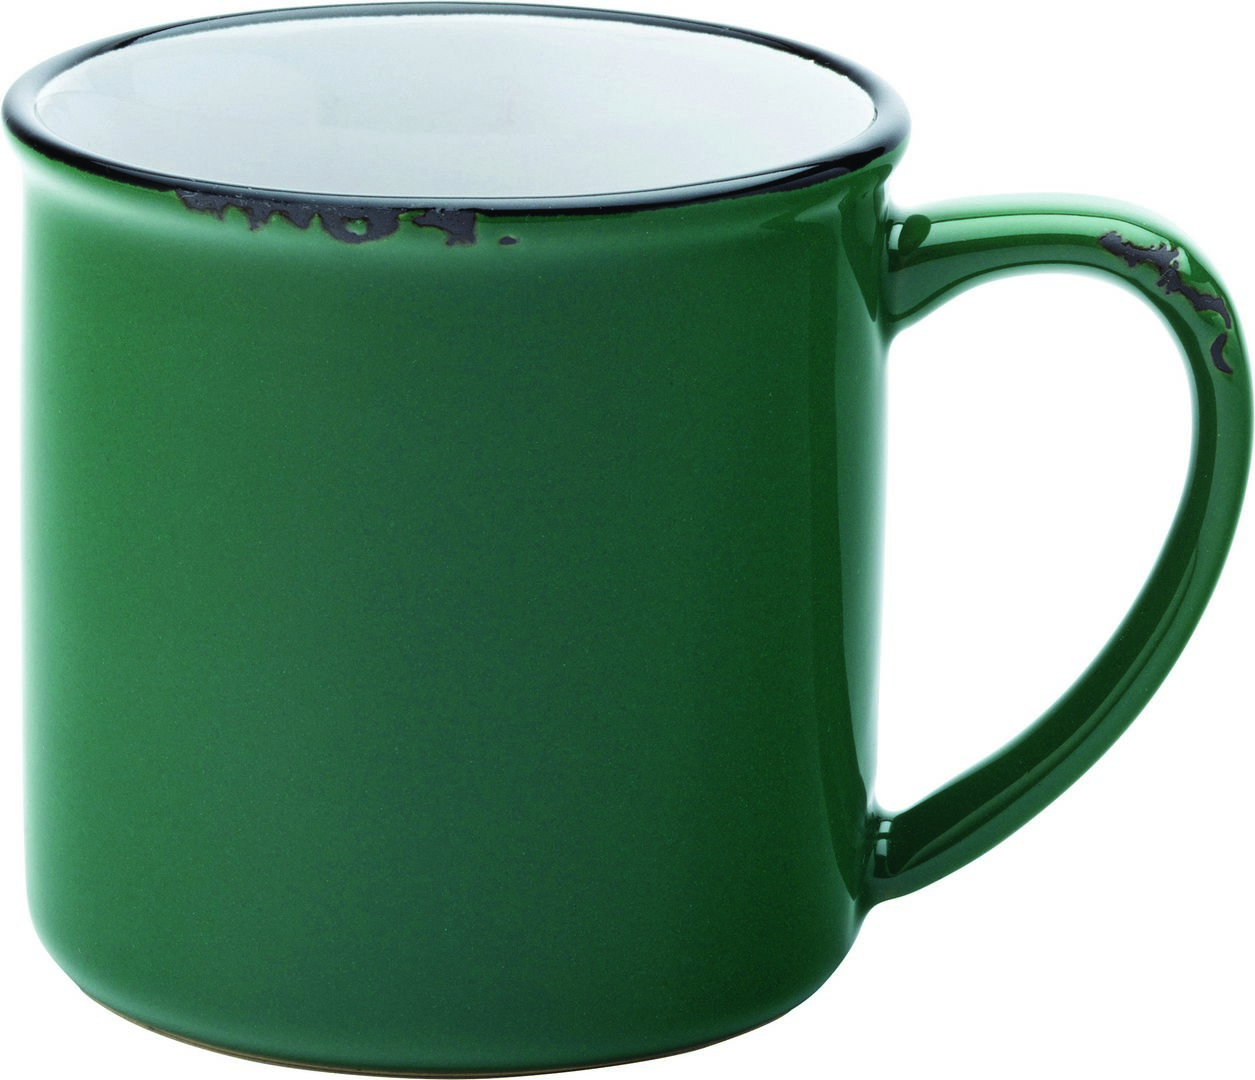 Avebury Colours Green Mug 10oz (28cl) - CT6015-000000-B01012 (Pack of 12)